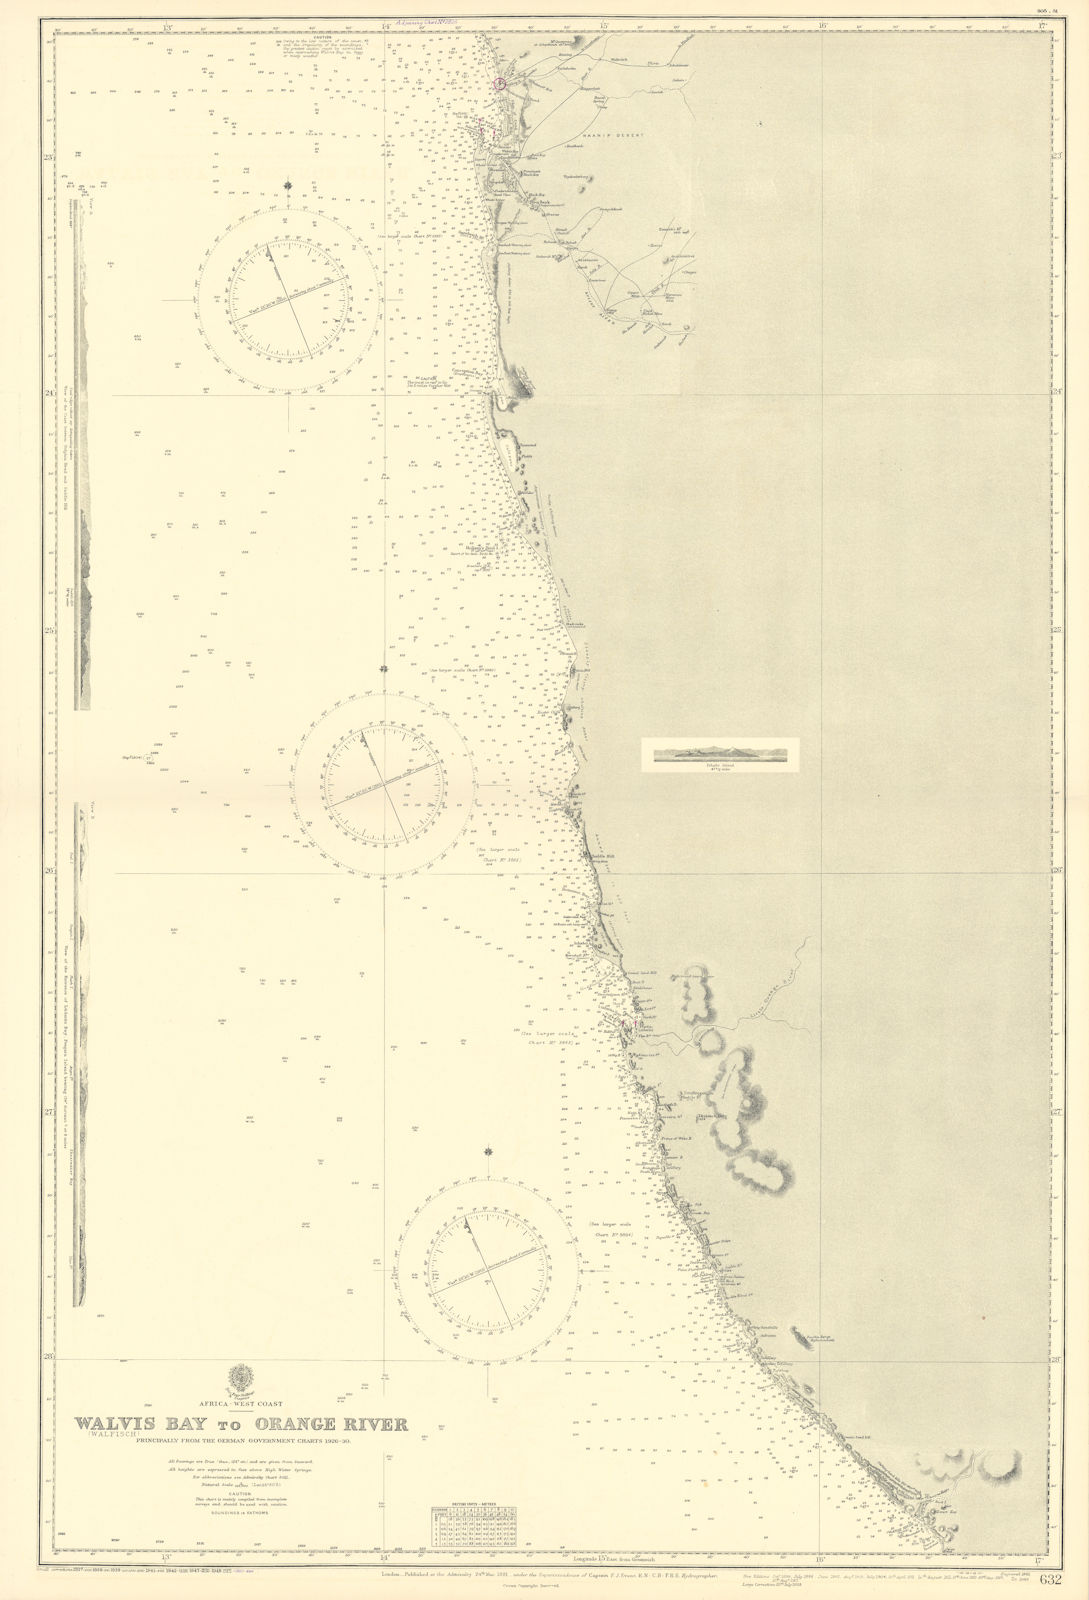 South Namibia coast. Walvis Bay-Orange River ADMIRALTY sea chart 1881 (1954) map